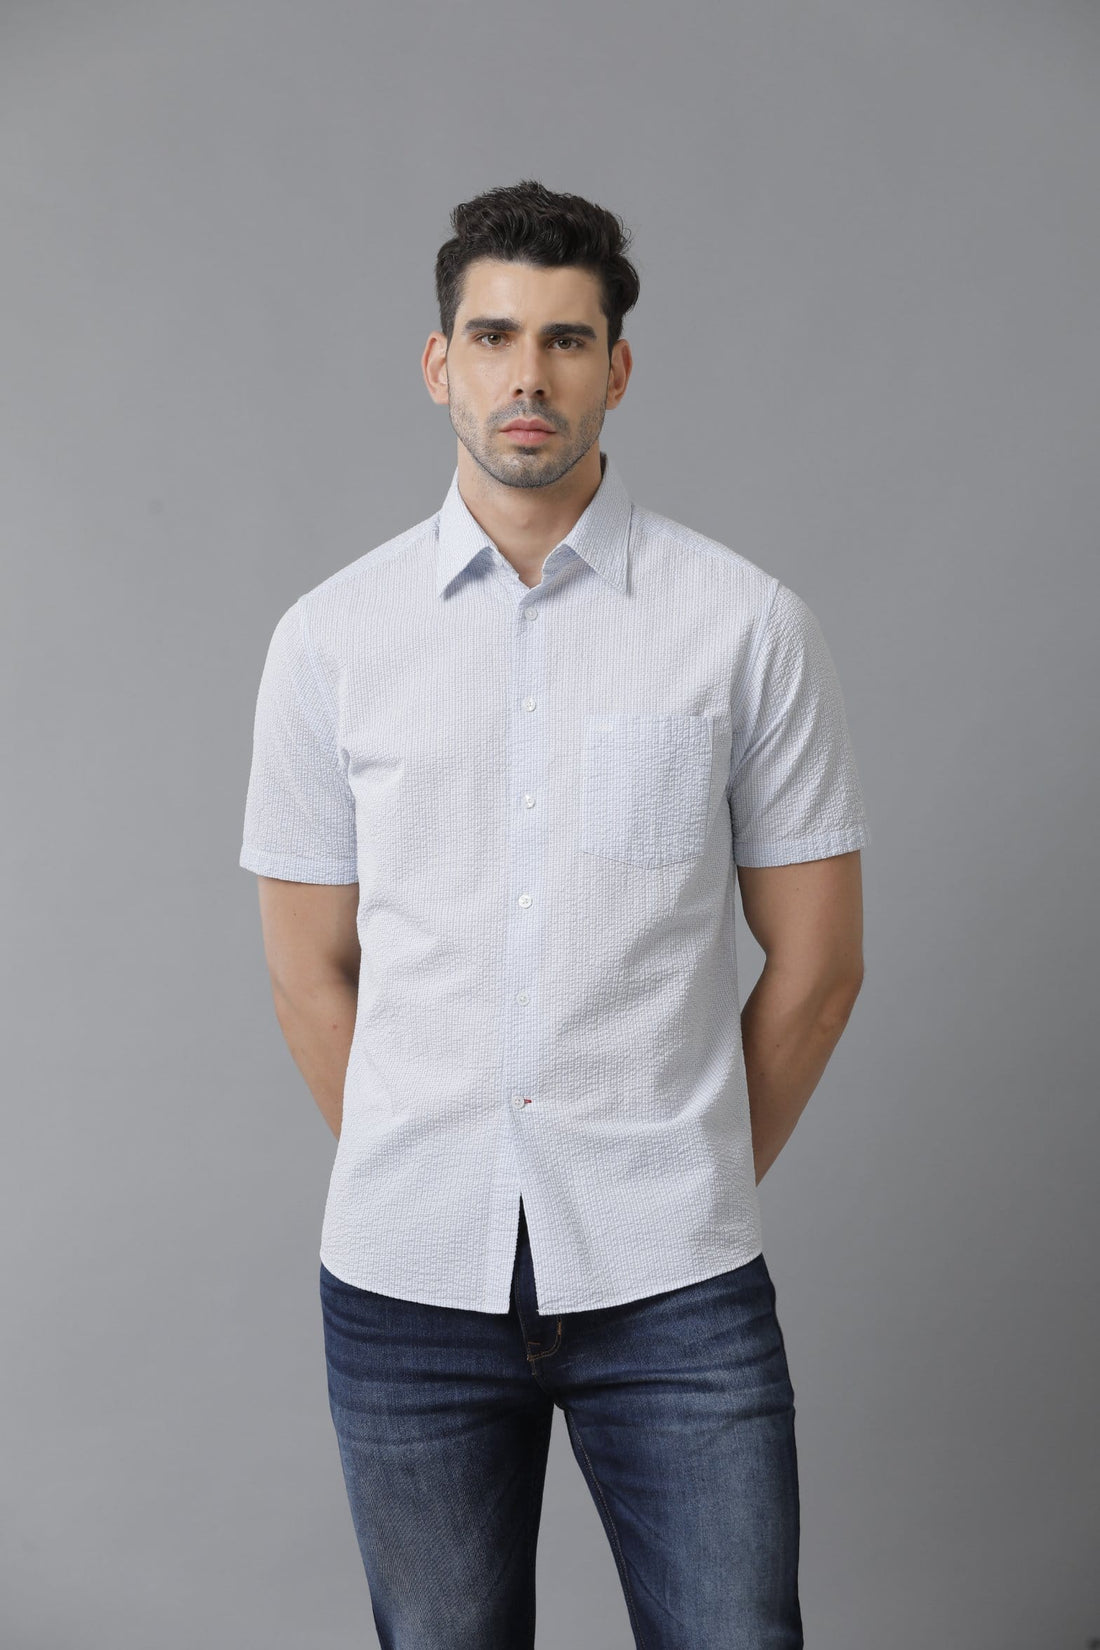 Textured Bluish White Shirt